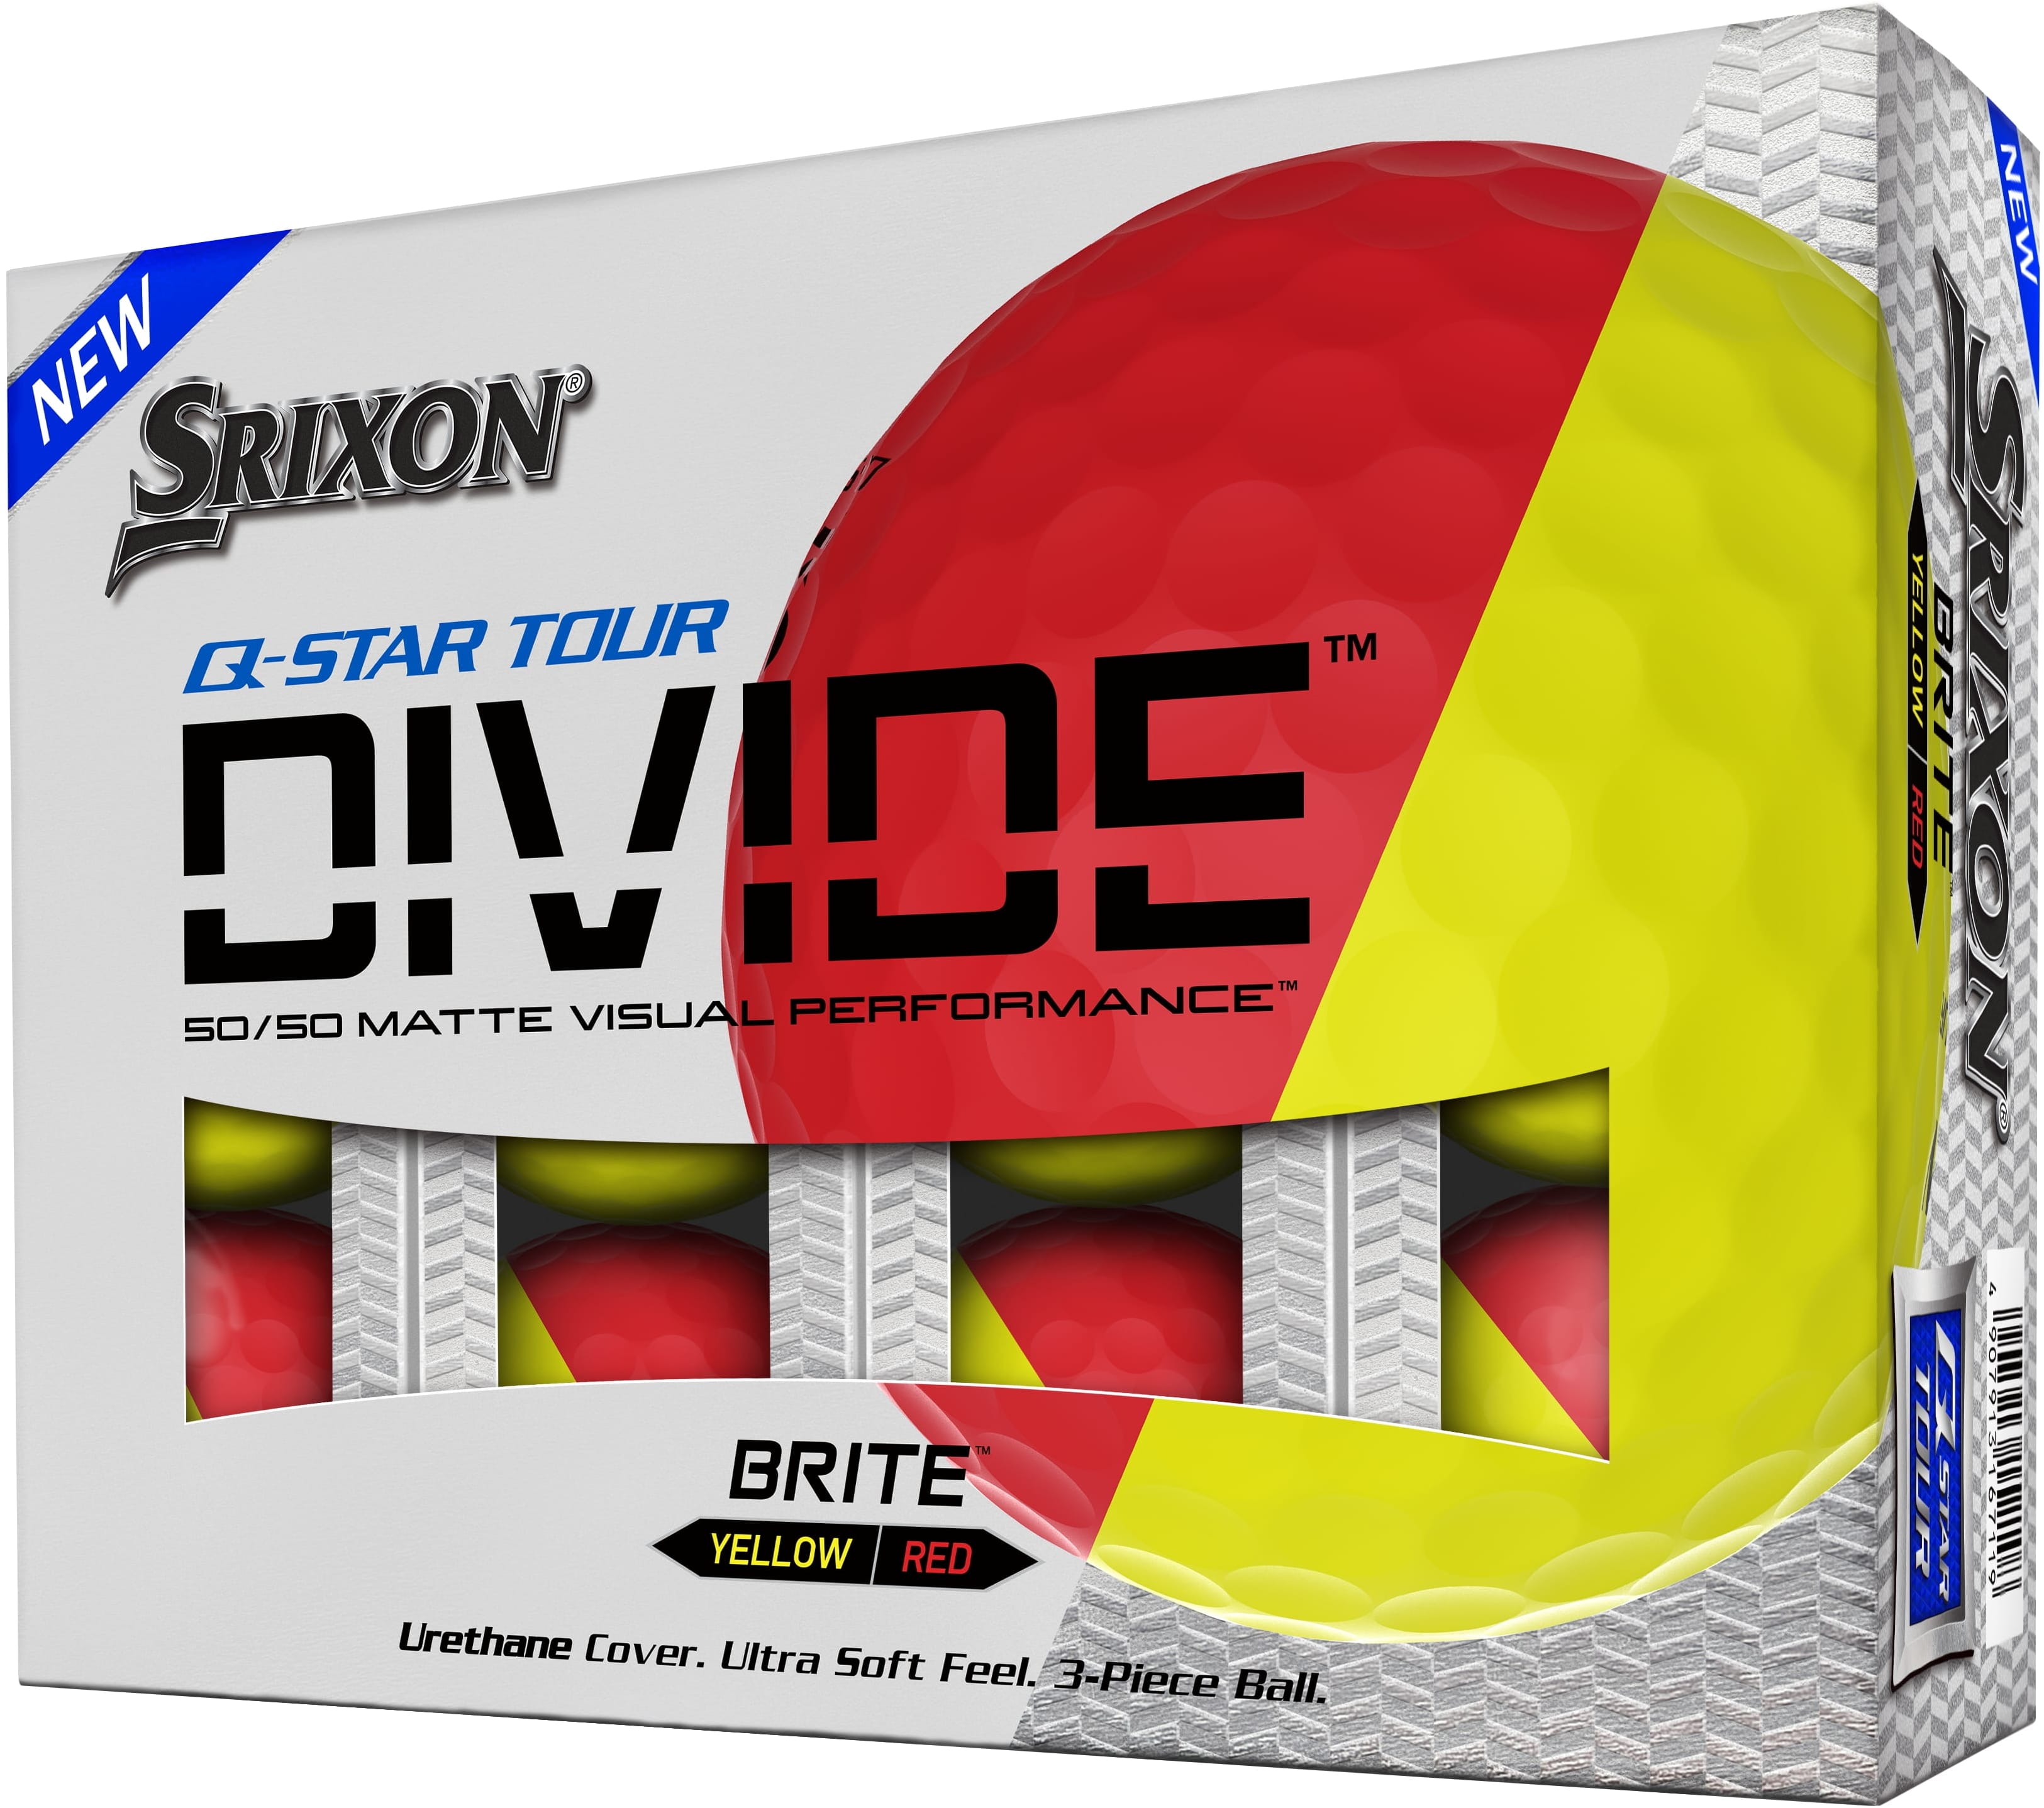 Srixon Q-Star Tour DIVIDE Golfbälle, yellow/red